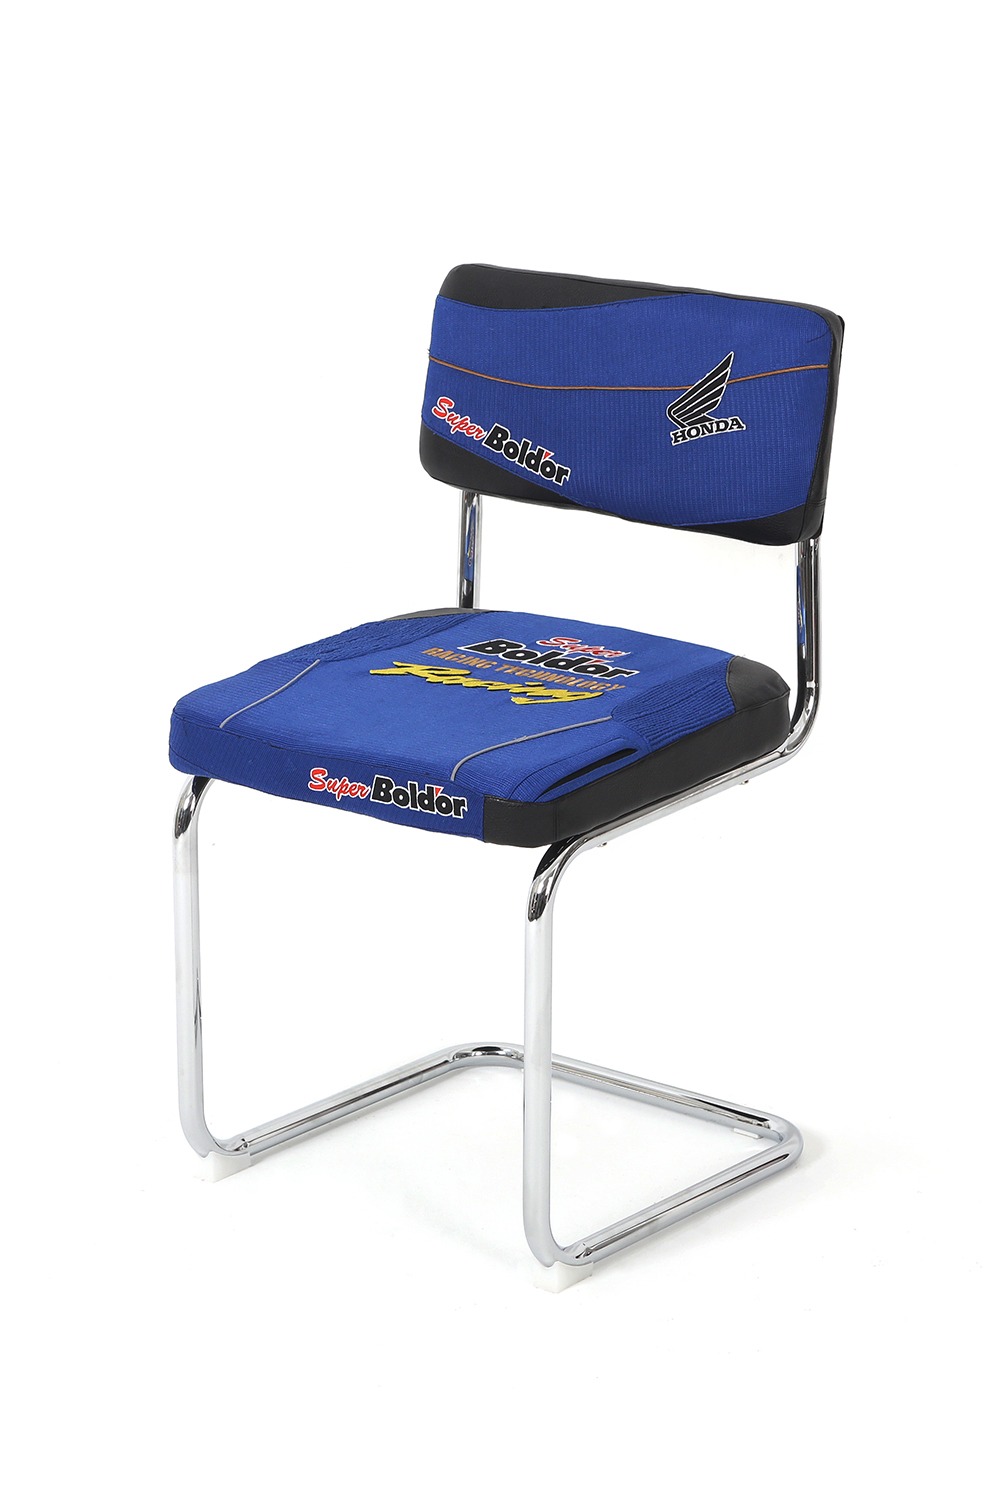 Chair C2 type 004 - Deconstructed Honda Boldor Racing Jacket Single Chair